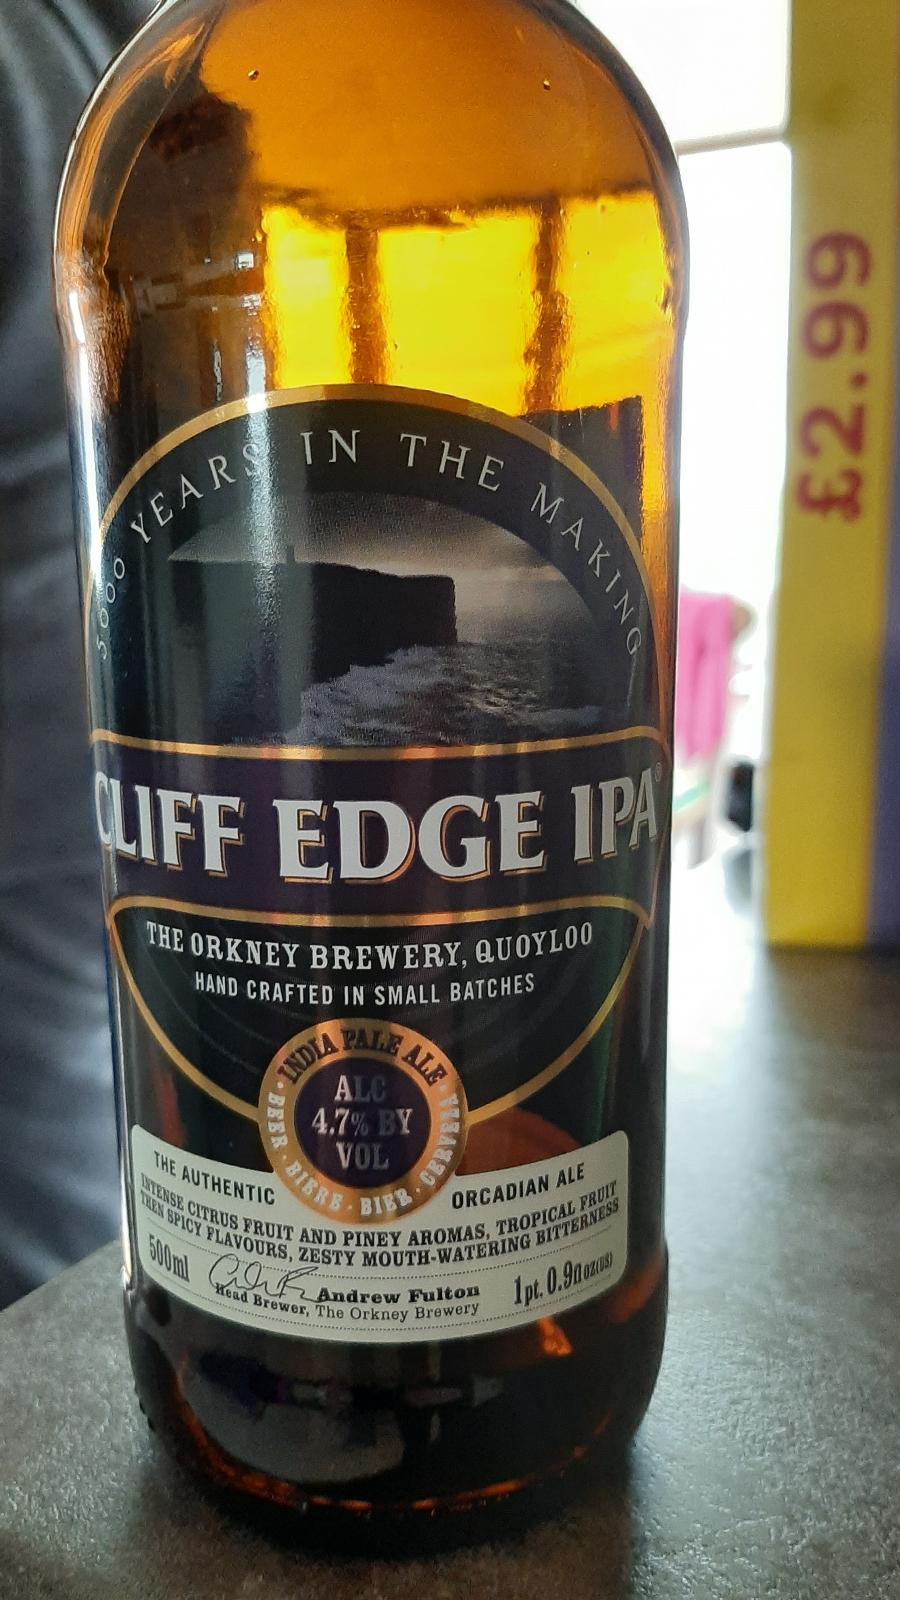 Cliff Edge IPA